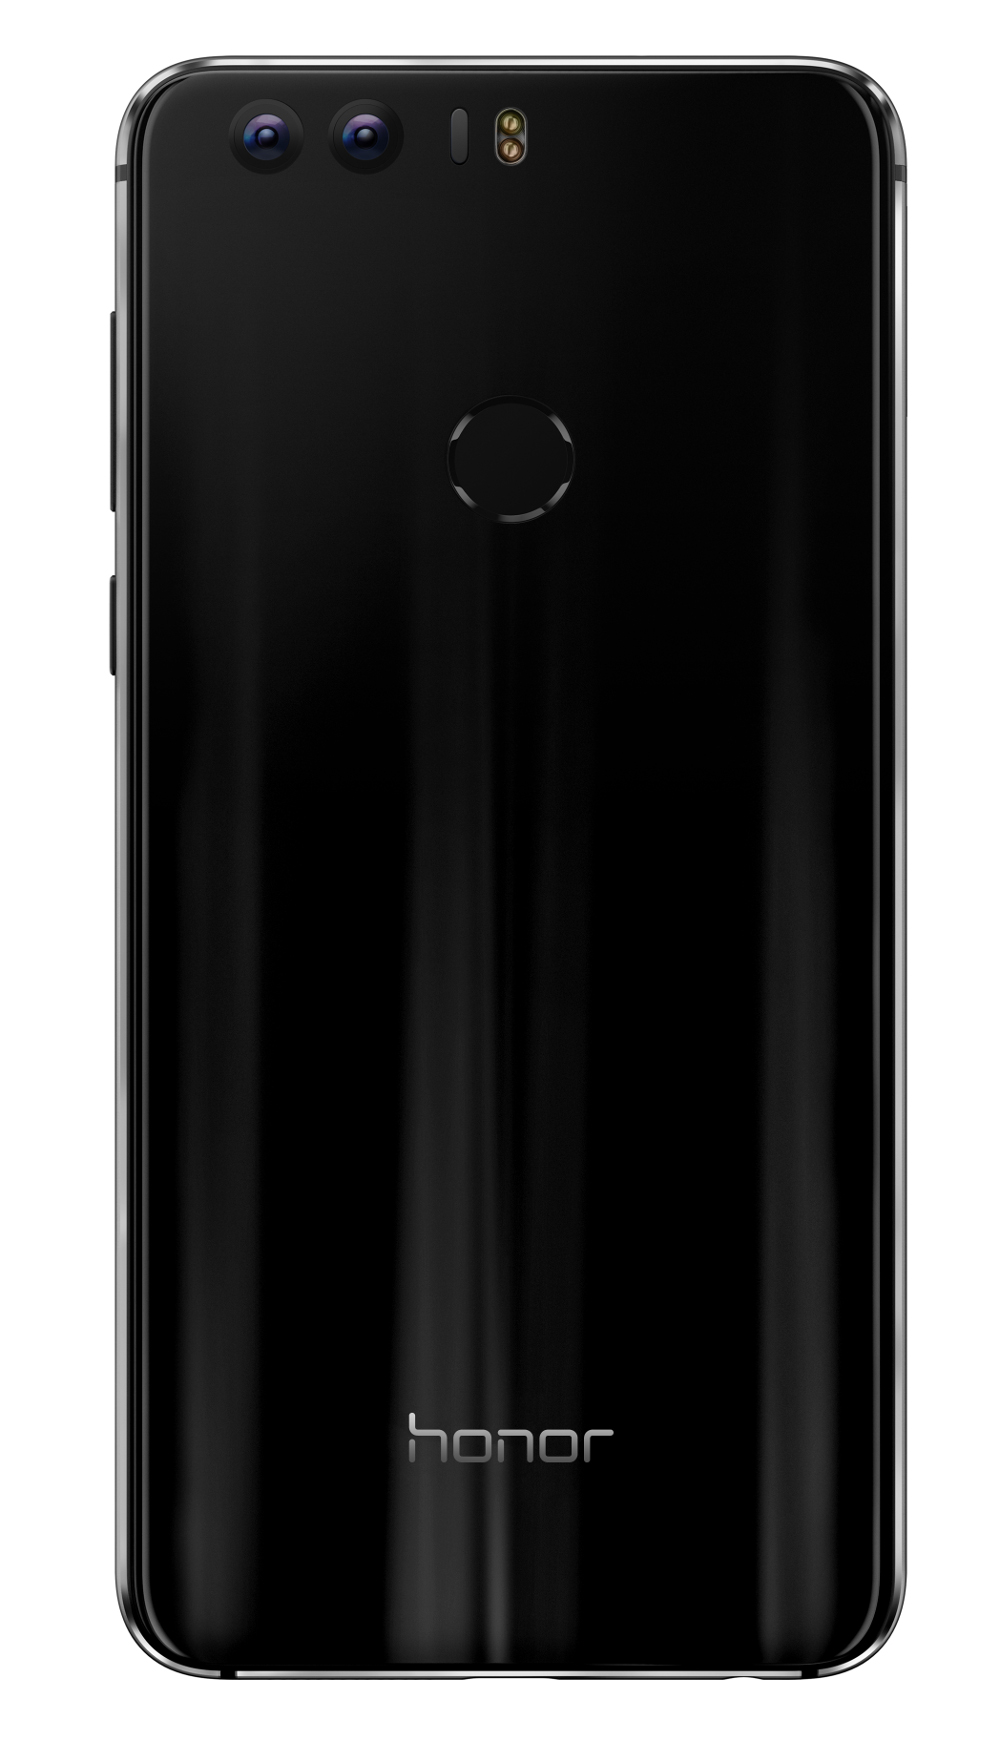 Honor mobile phone. Huawei Honor 8 32gb. Honor 8 FRD-al10. Хонор 8а черный. Хонор 8 Хуавей 32.